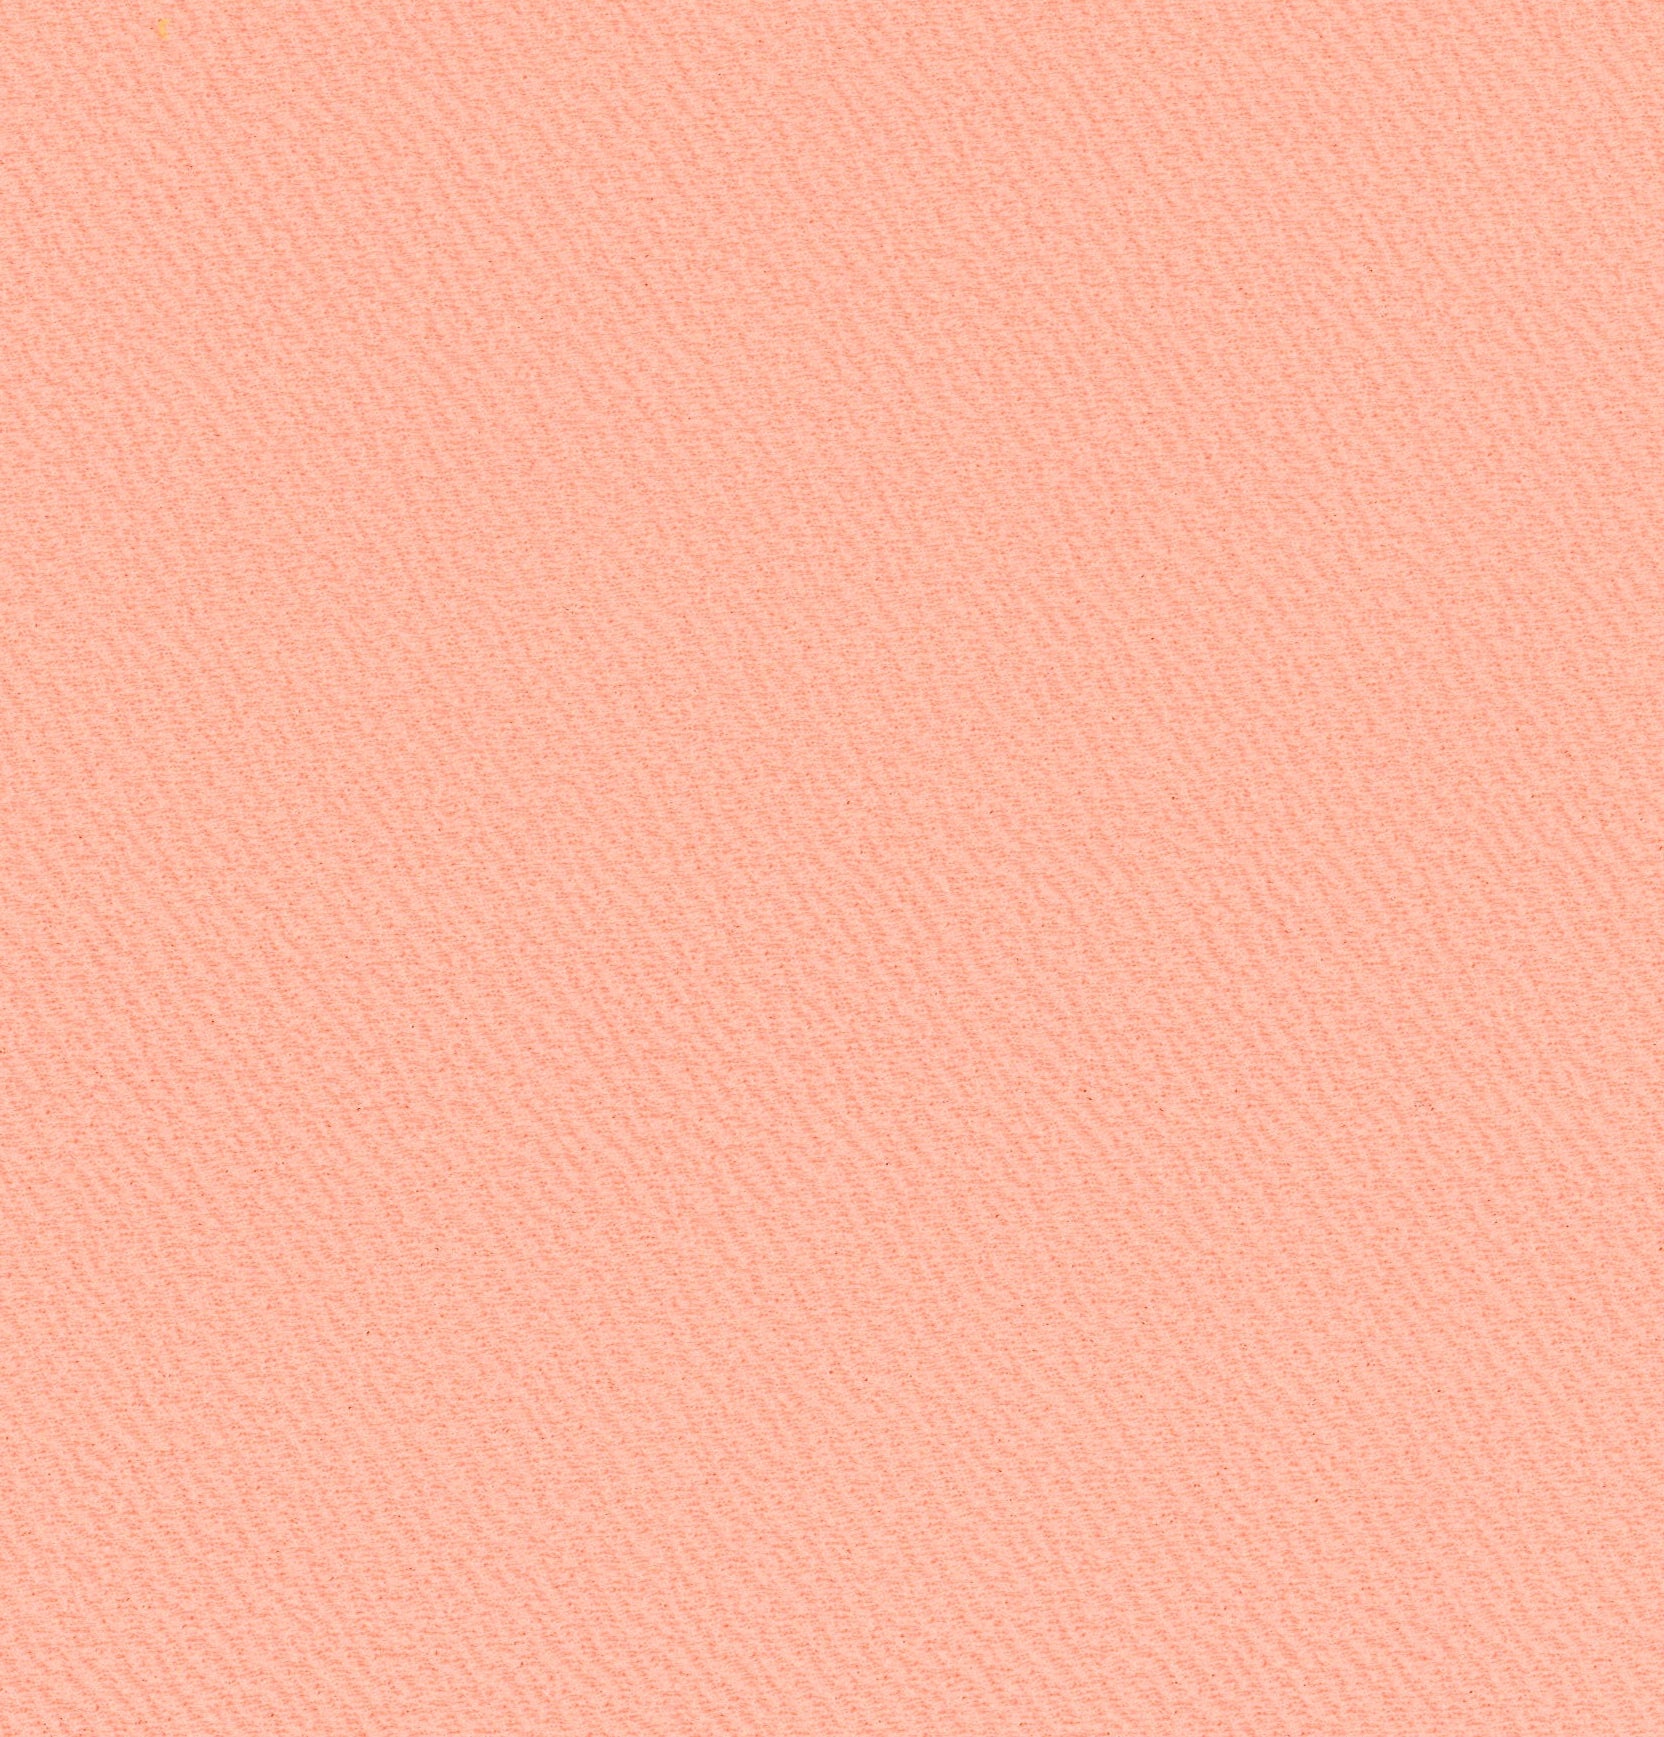 13018-02 Light Salmon Riverpool Jacquard Plain Dyed Blend 260g/yd 58&quot; blend jacquard knit pink plain dyed polyester spandex Solid Color, Jacquard - knit fabric - woven fabric - fabric company - fabric wholesale - fabric b2b - fabric factory - high quality fabric - hong kong fabric - fabric hk - acetate fabric - cotton fabric - linen fabric - metallic fabric - nylon fabric - polyester fabric - spandex fabric - chun wing hing - cwh hk - fabric worldwide ship - 針織布 - 梳織布 - 布料公司- 布料批發 - 香港布料 - 秦榮興